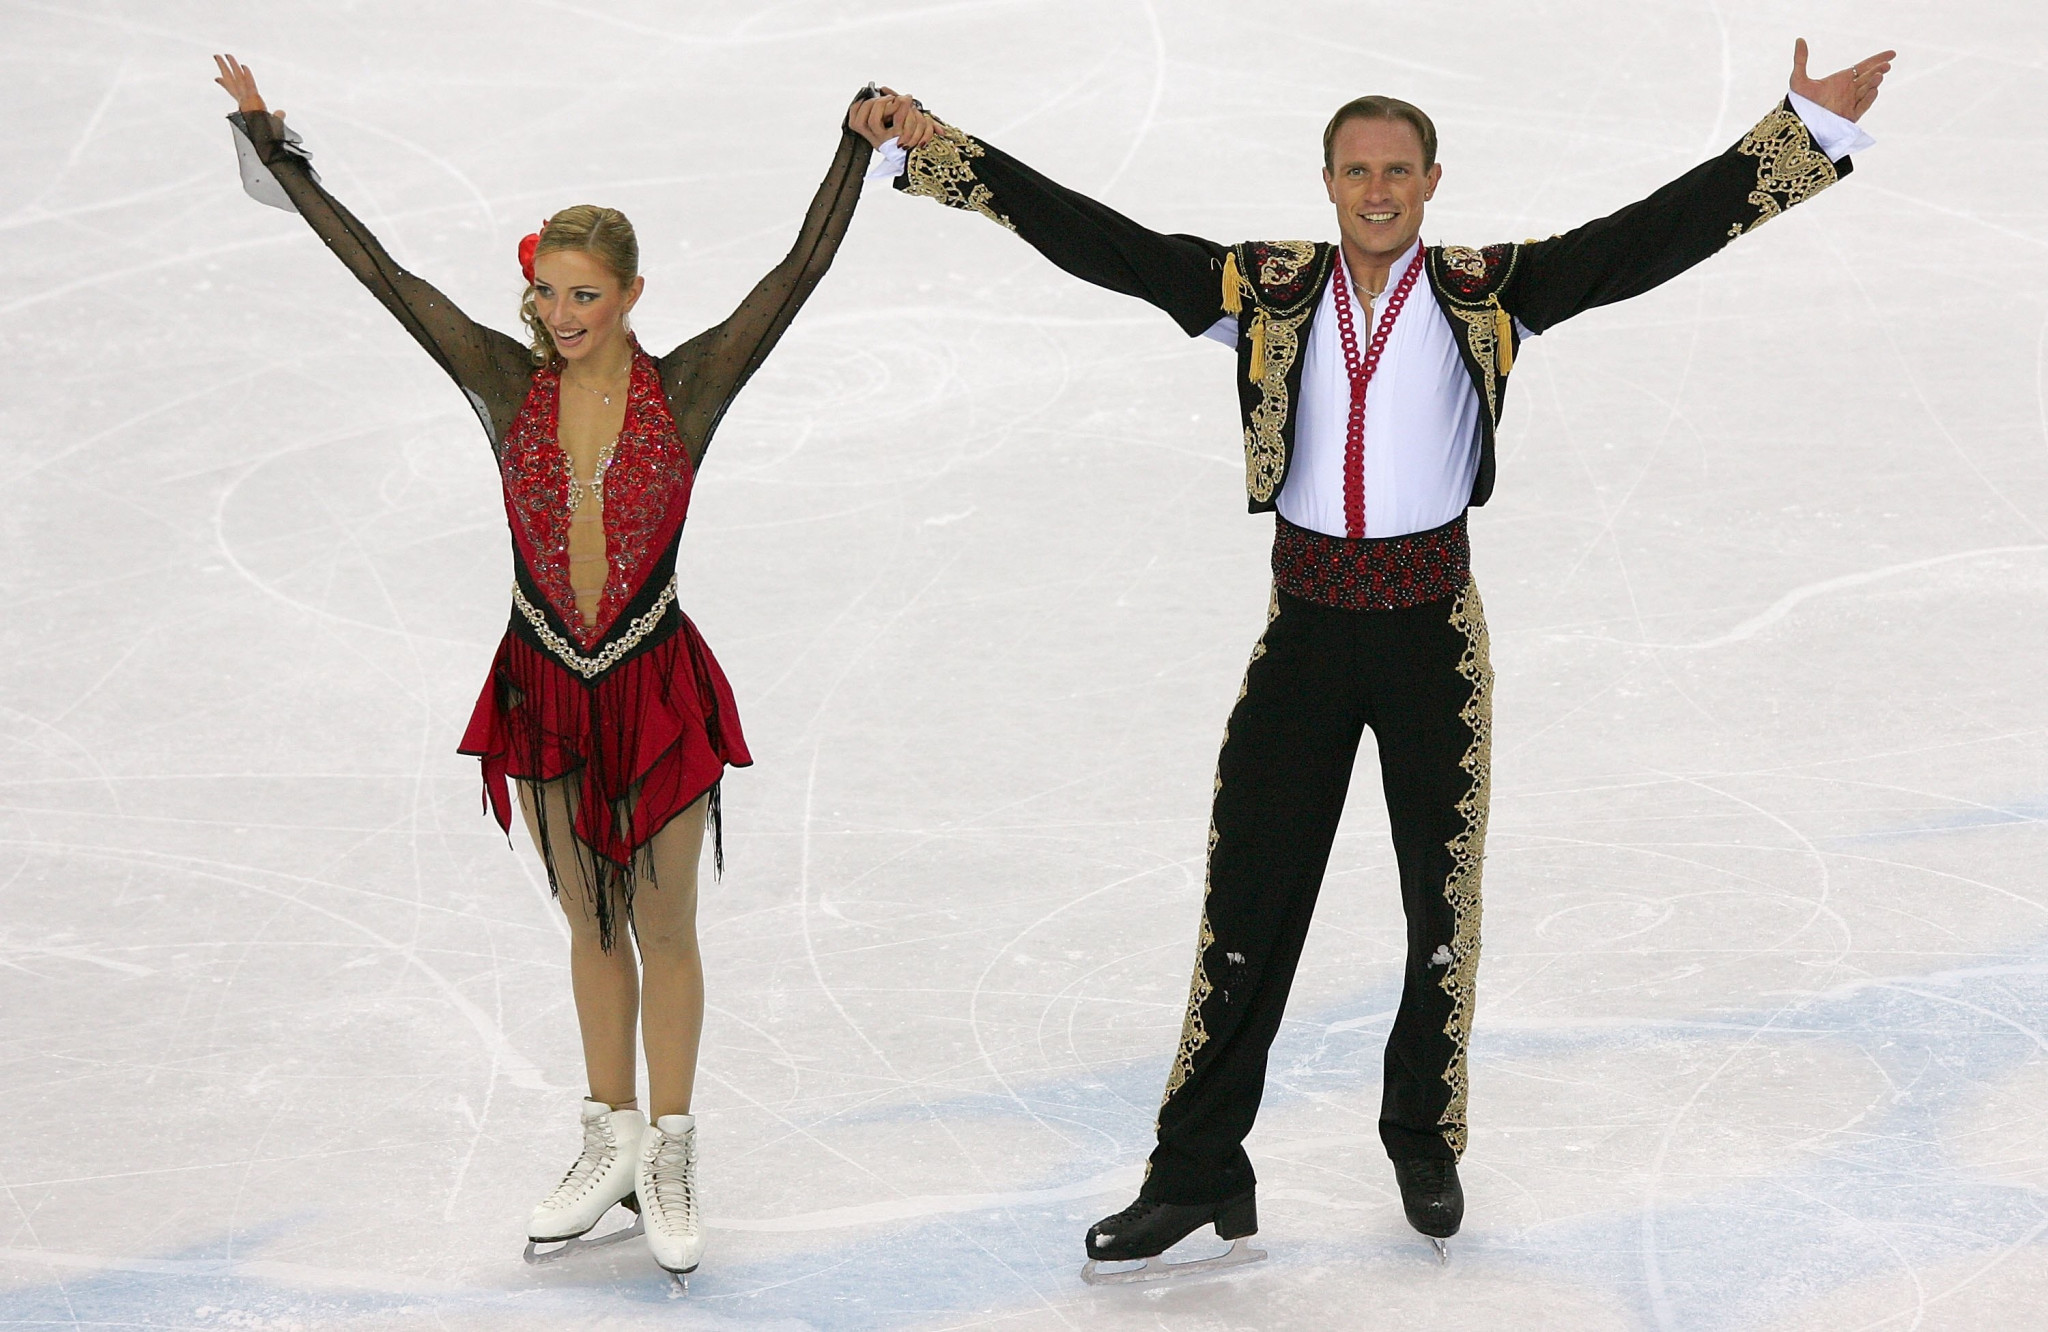 Tatiana Navka claimed ice dance gold at Turin 2006 with Roman Kostomarov ©Getty Images 